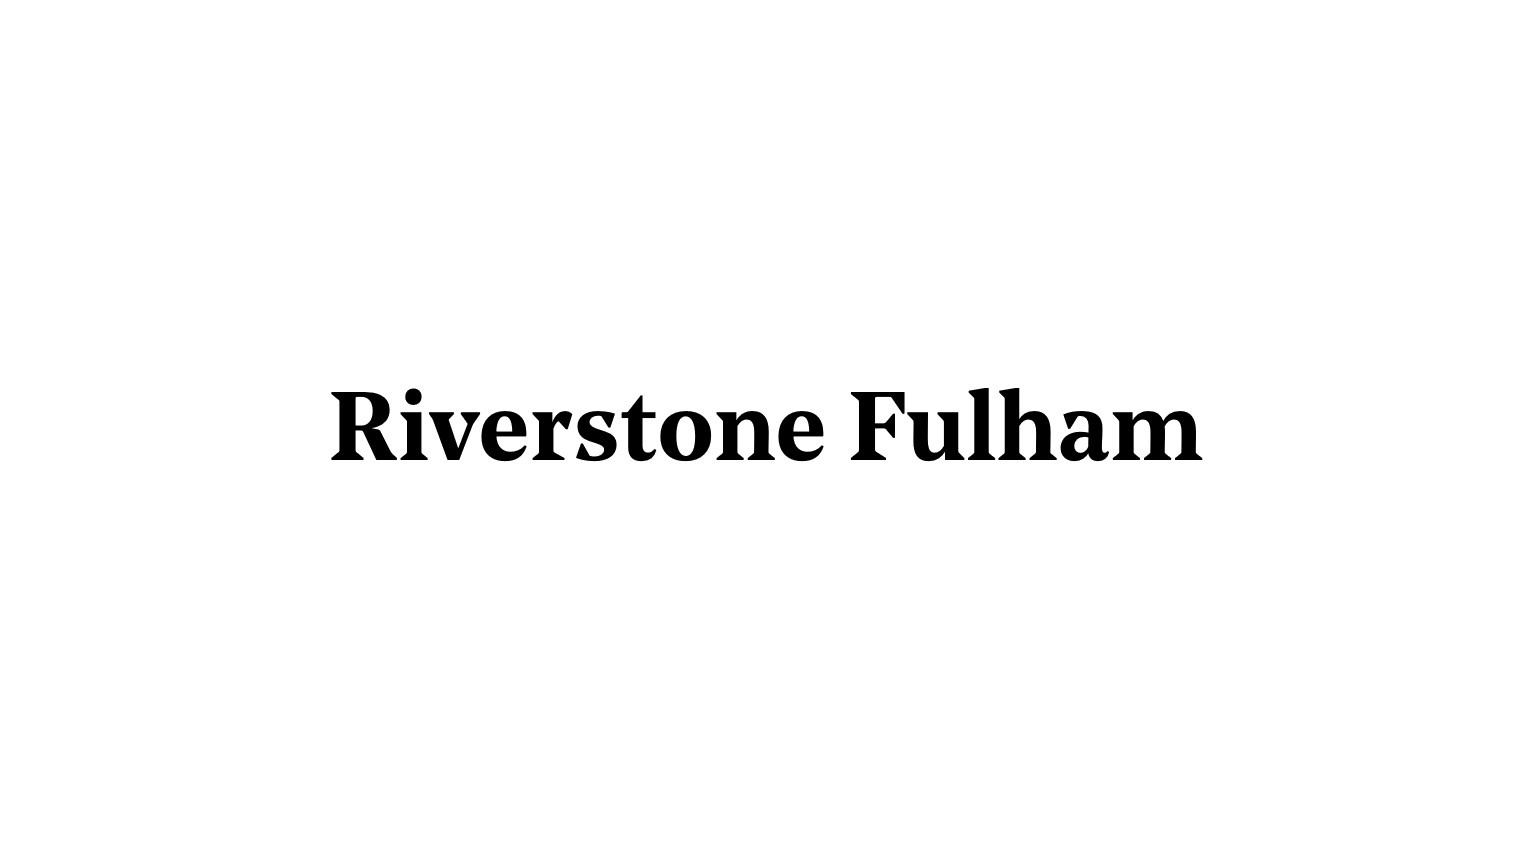 Riverstone Fulham development